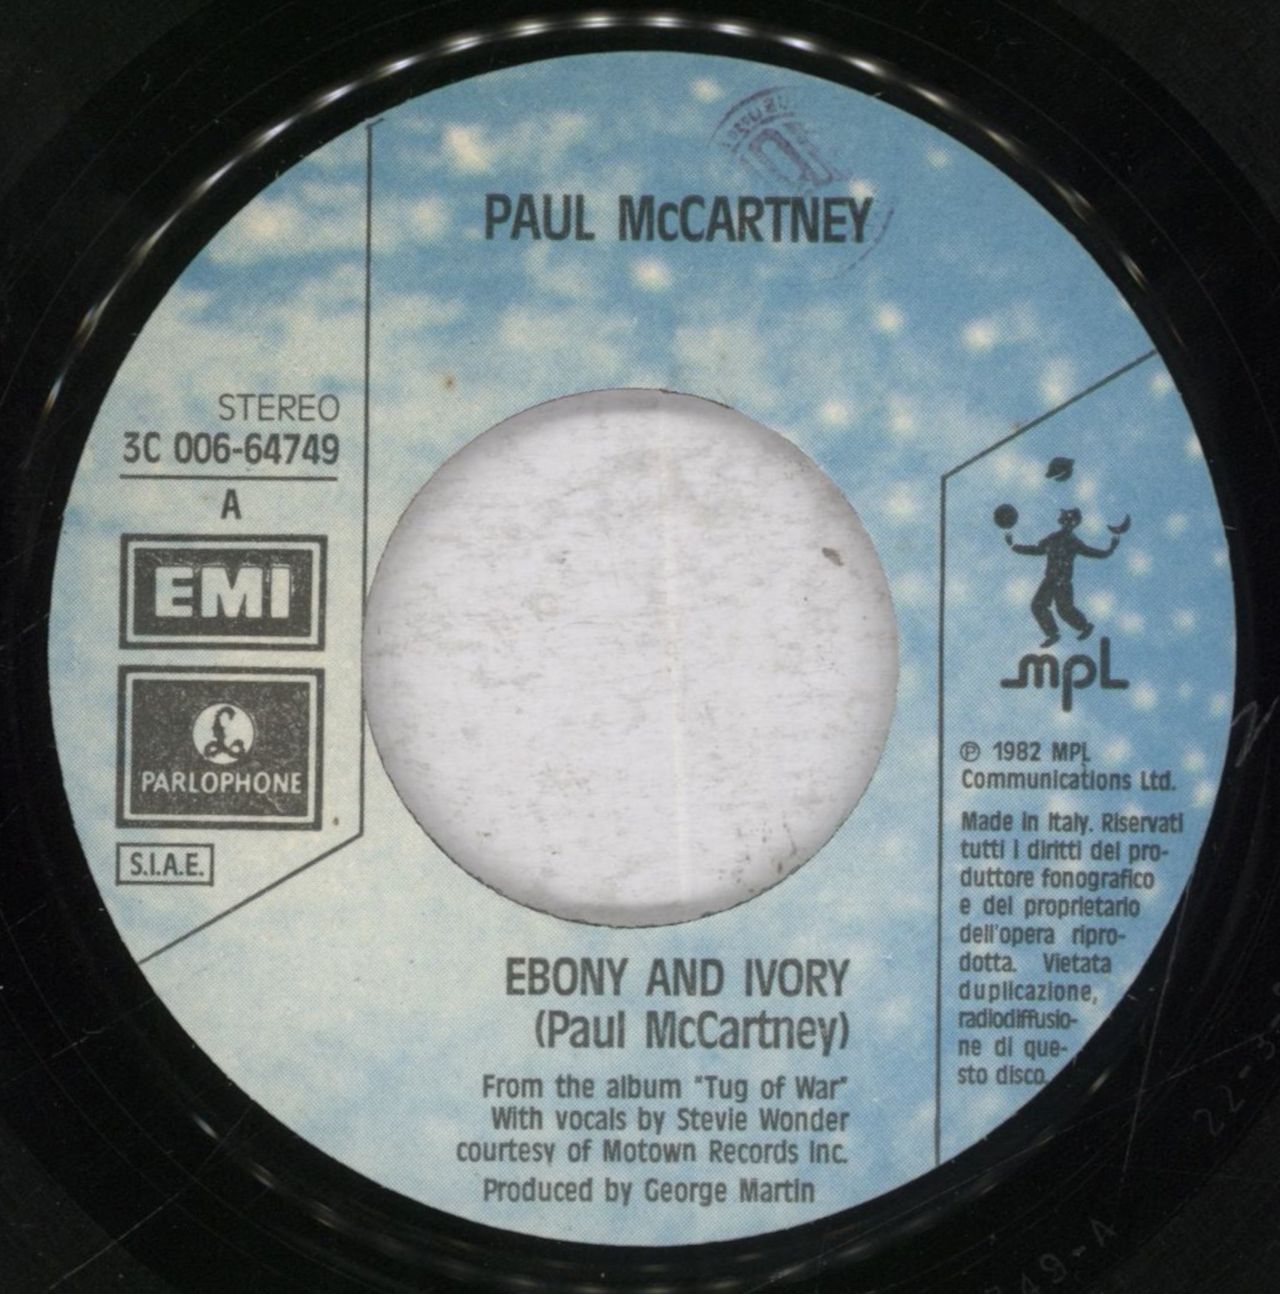 Paul McCartney and Wings Ebony And Ivory - Wide UK 7